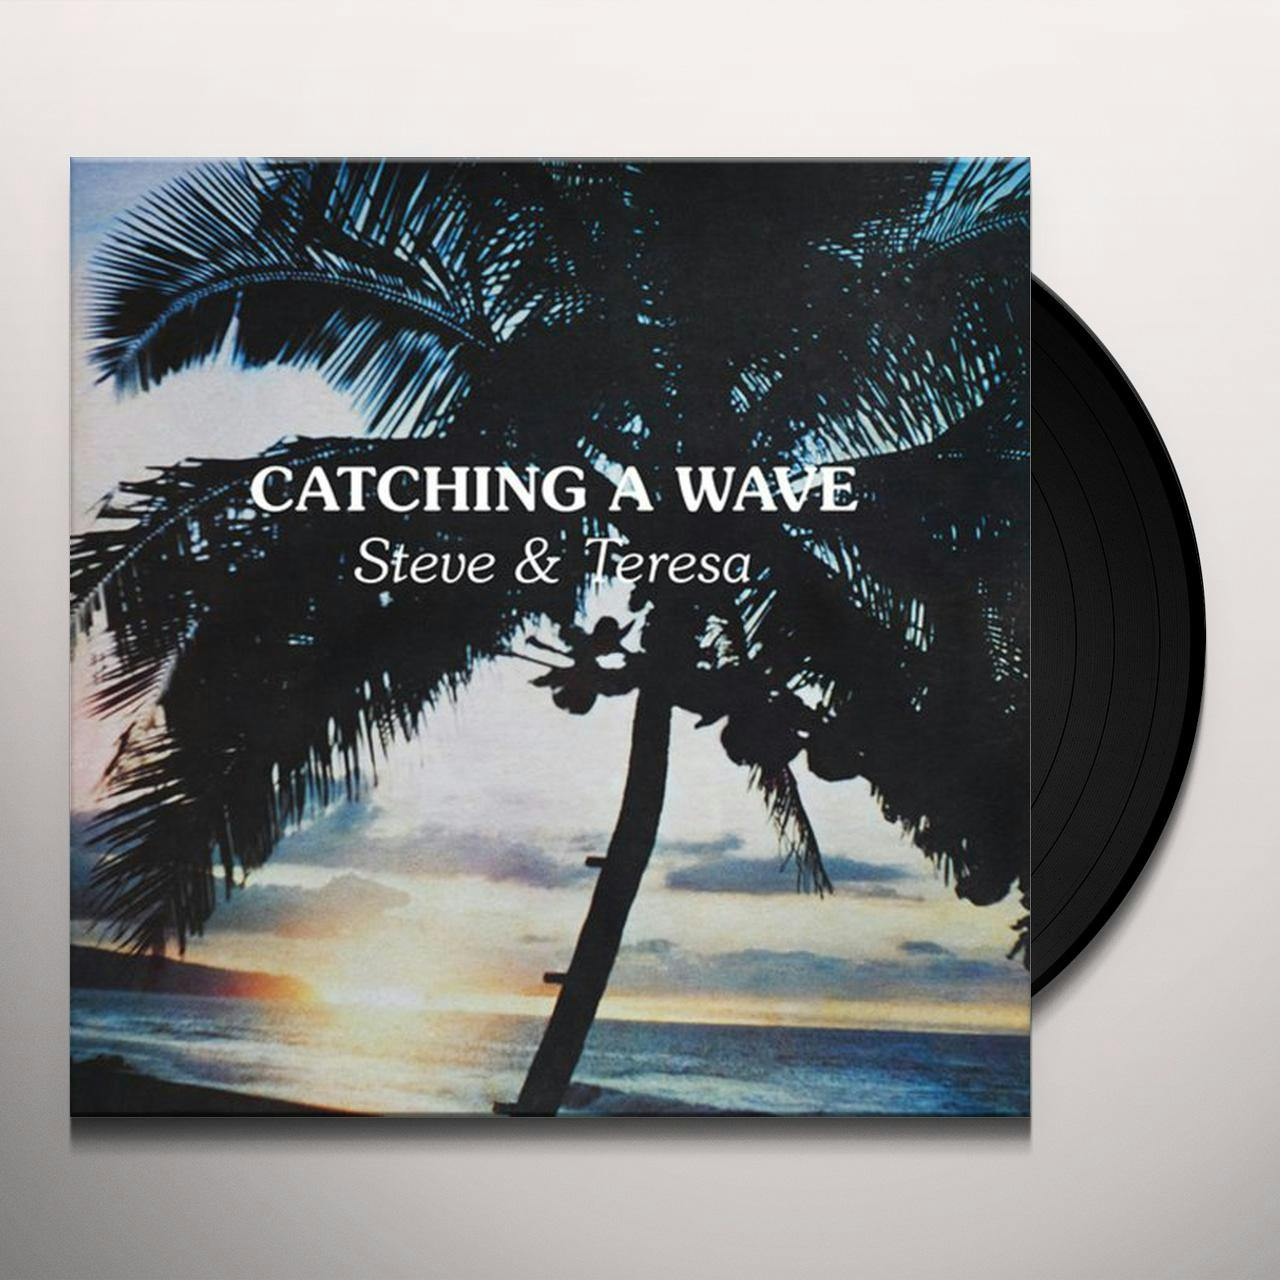 Record　Catching　Teresa　Steve　Vinyl　A　Wave